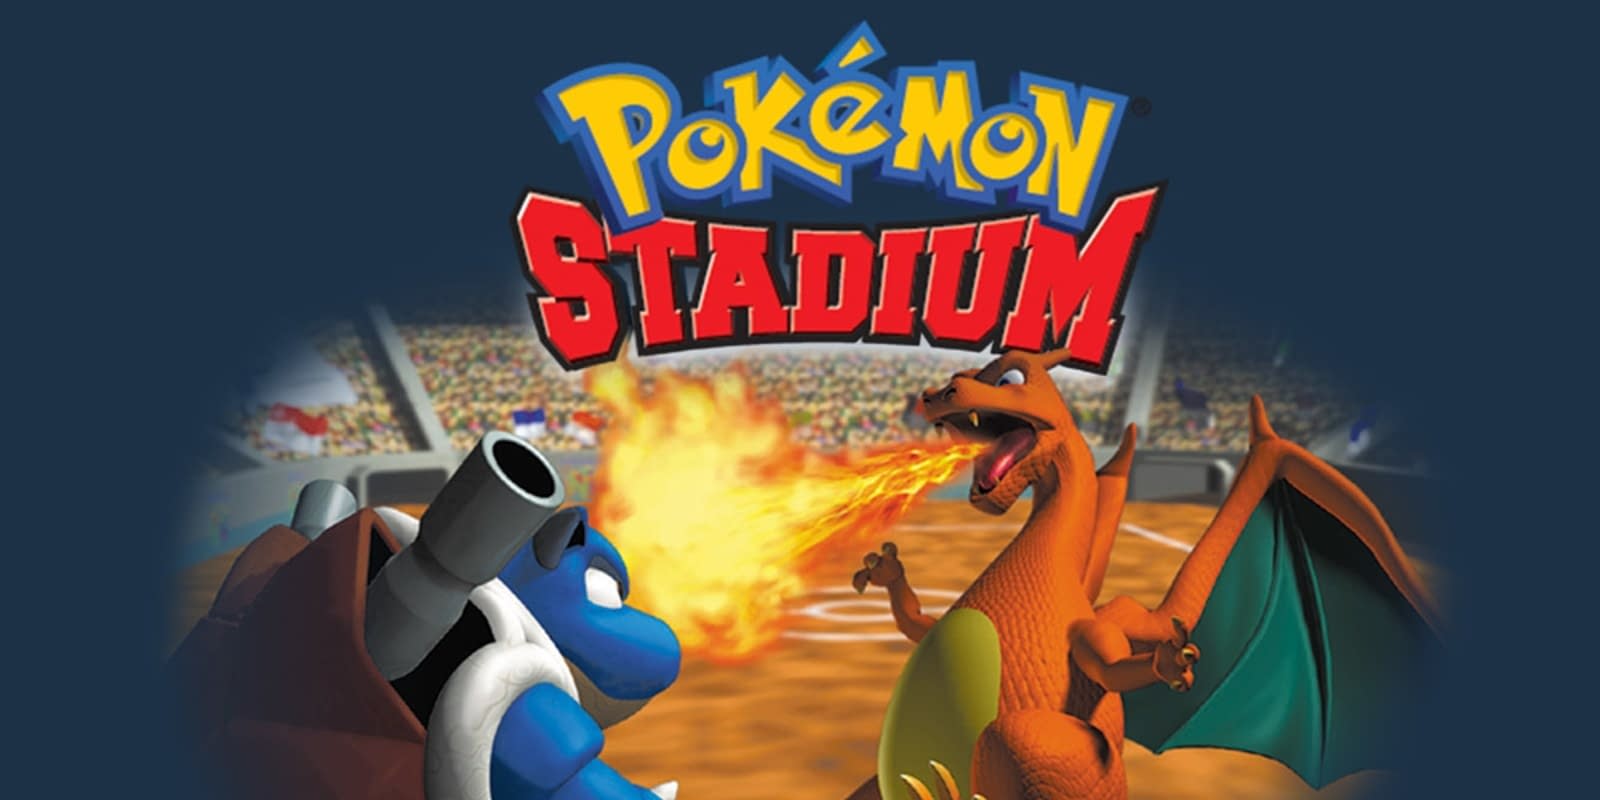 Pokemon Stadium comes from Nintendo Switch Online service